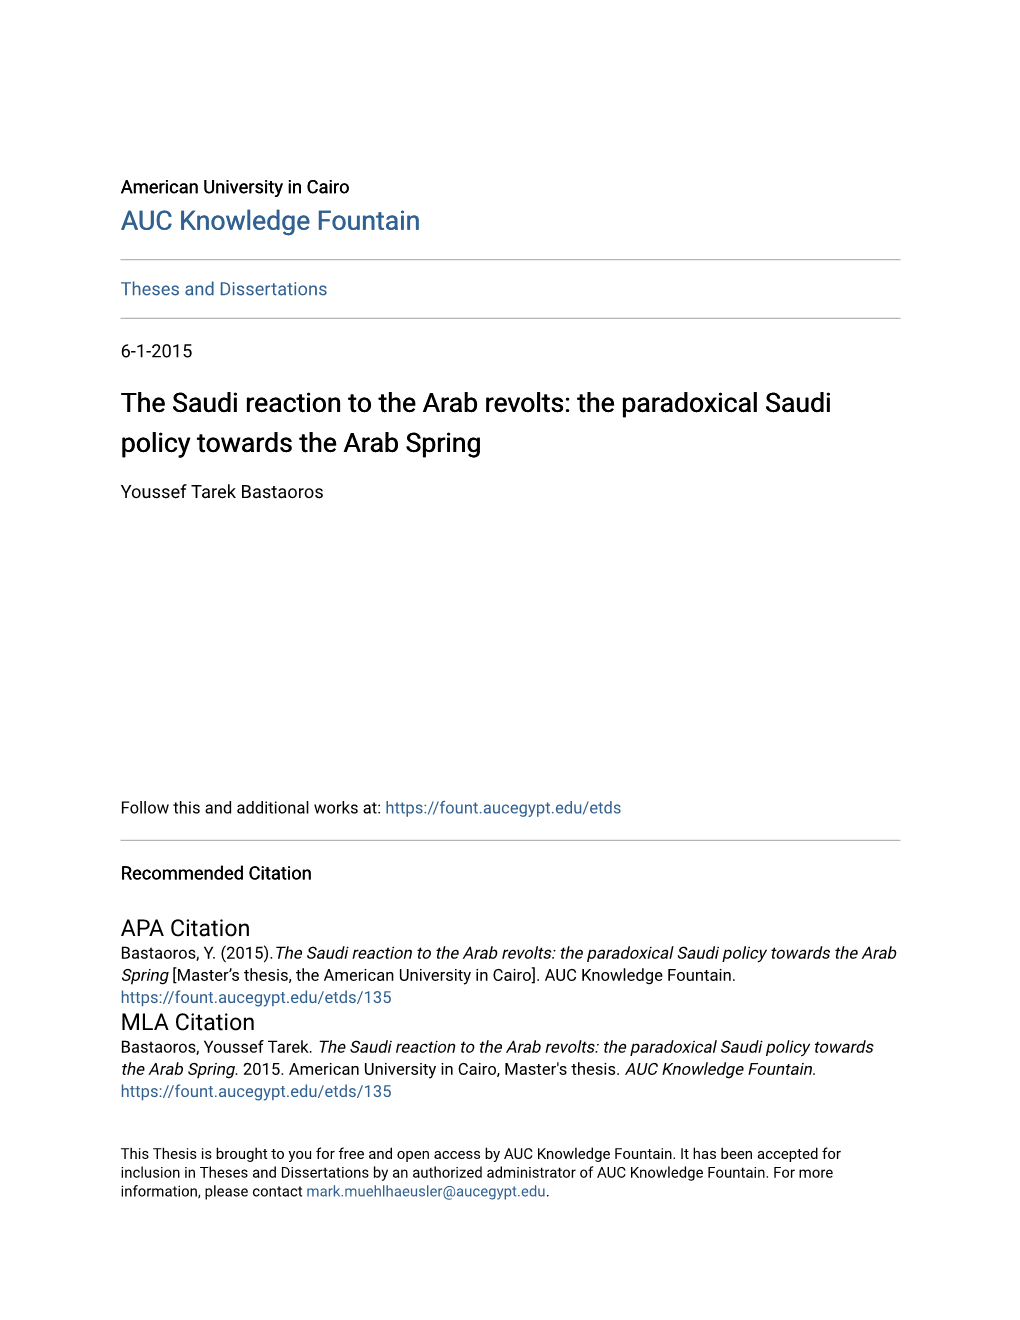 The Paradoxical Saudi Policy Towards the Arab Spring